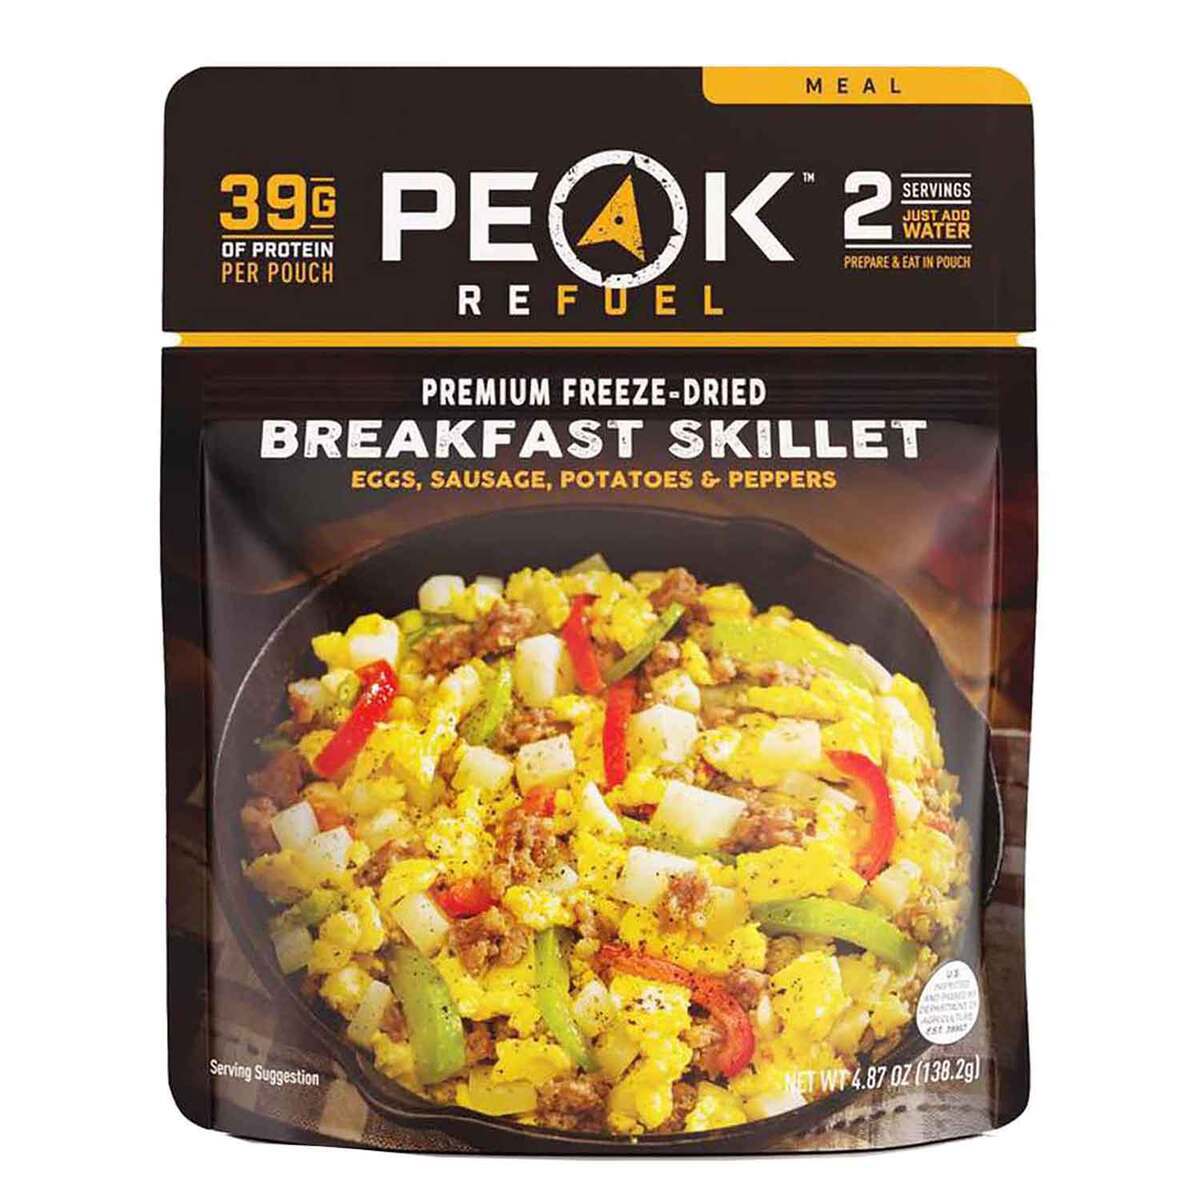 Peak Refuel Breakfast Skillet v2